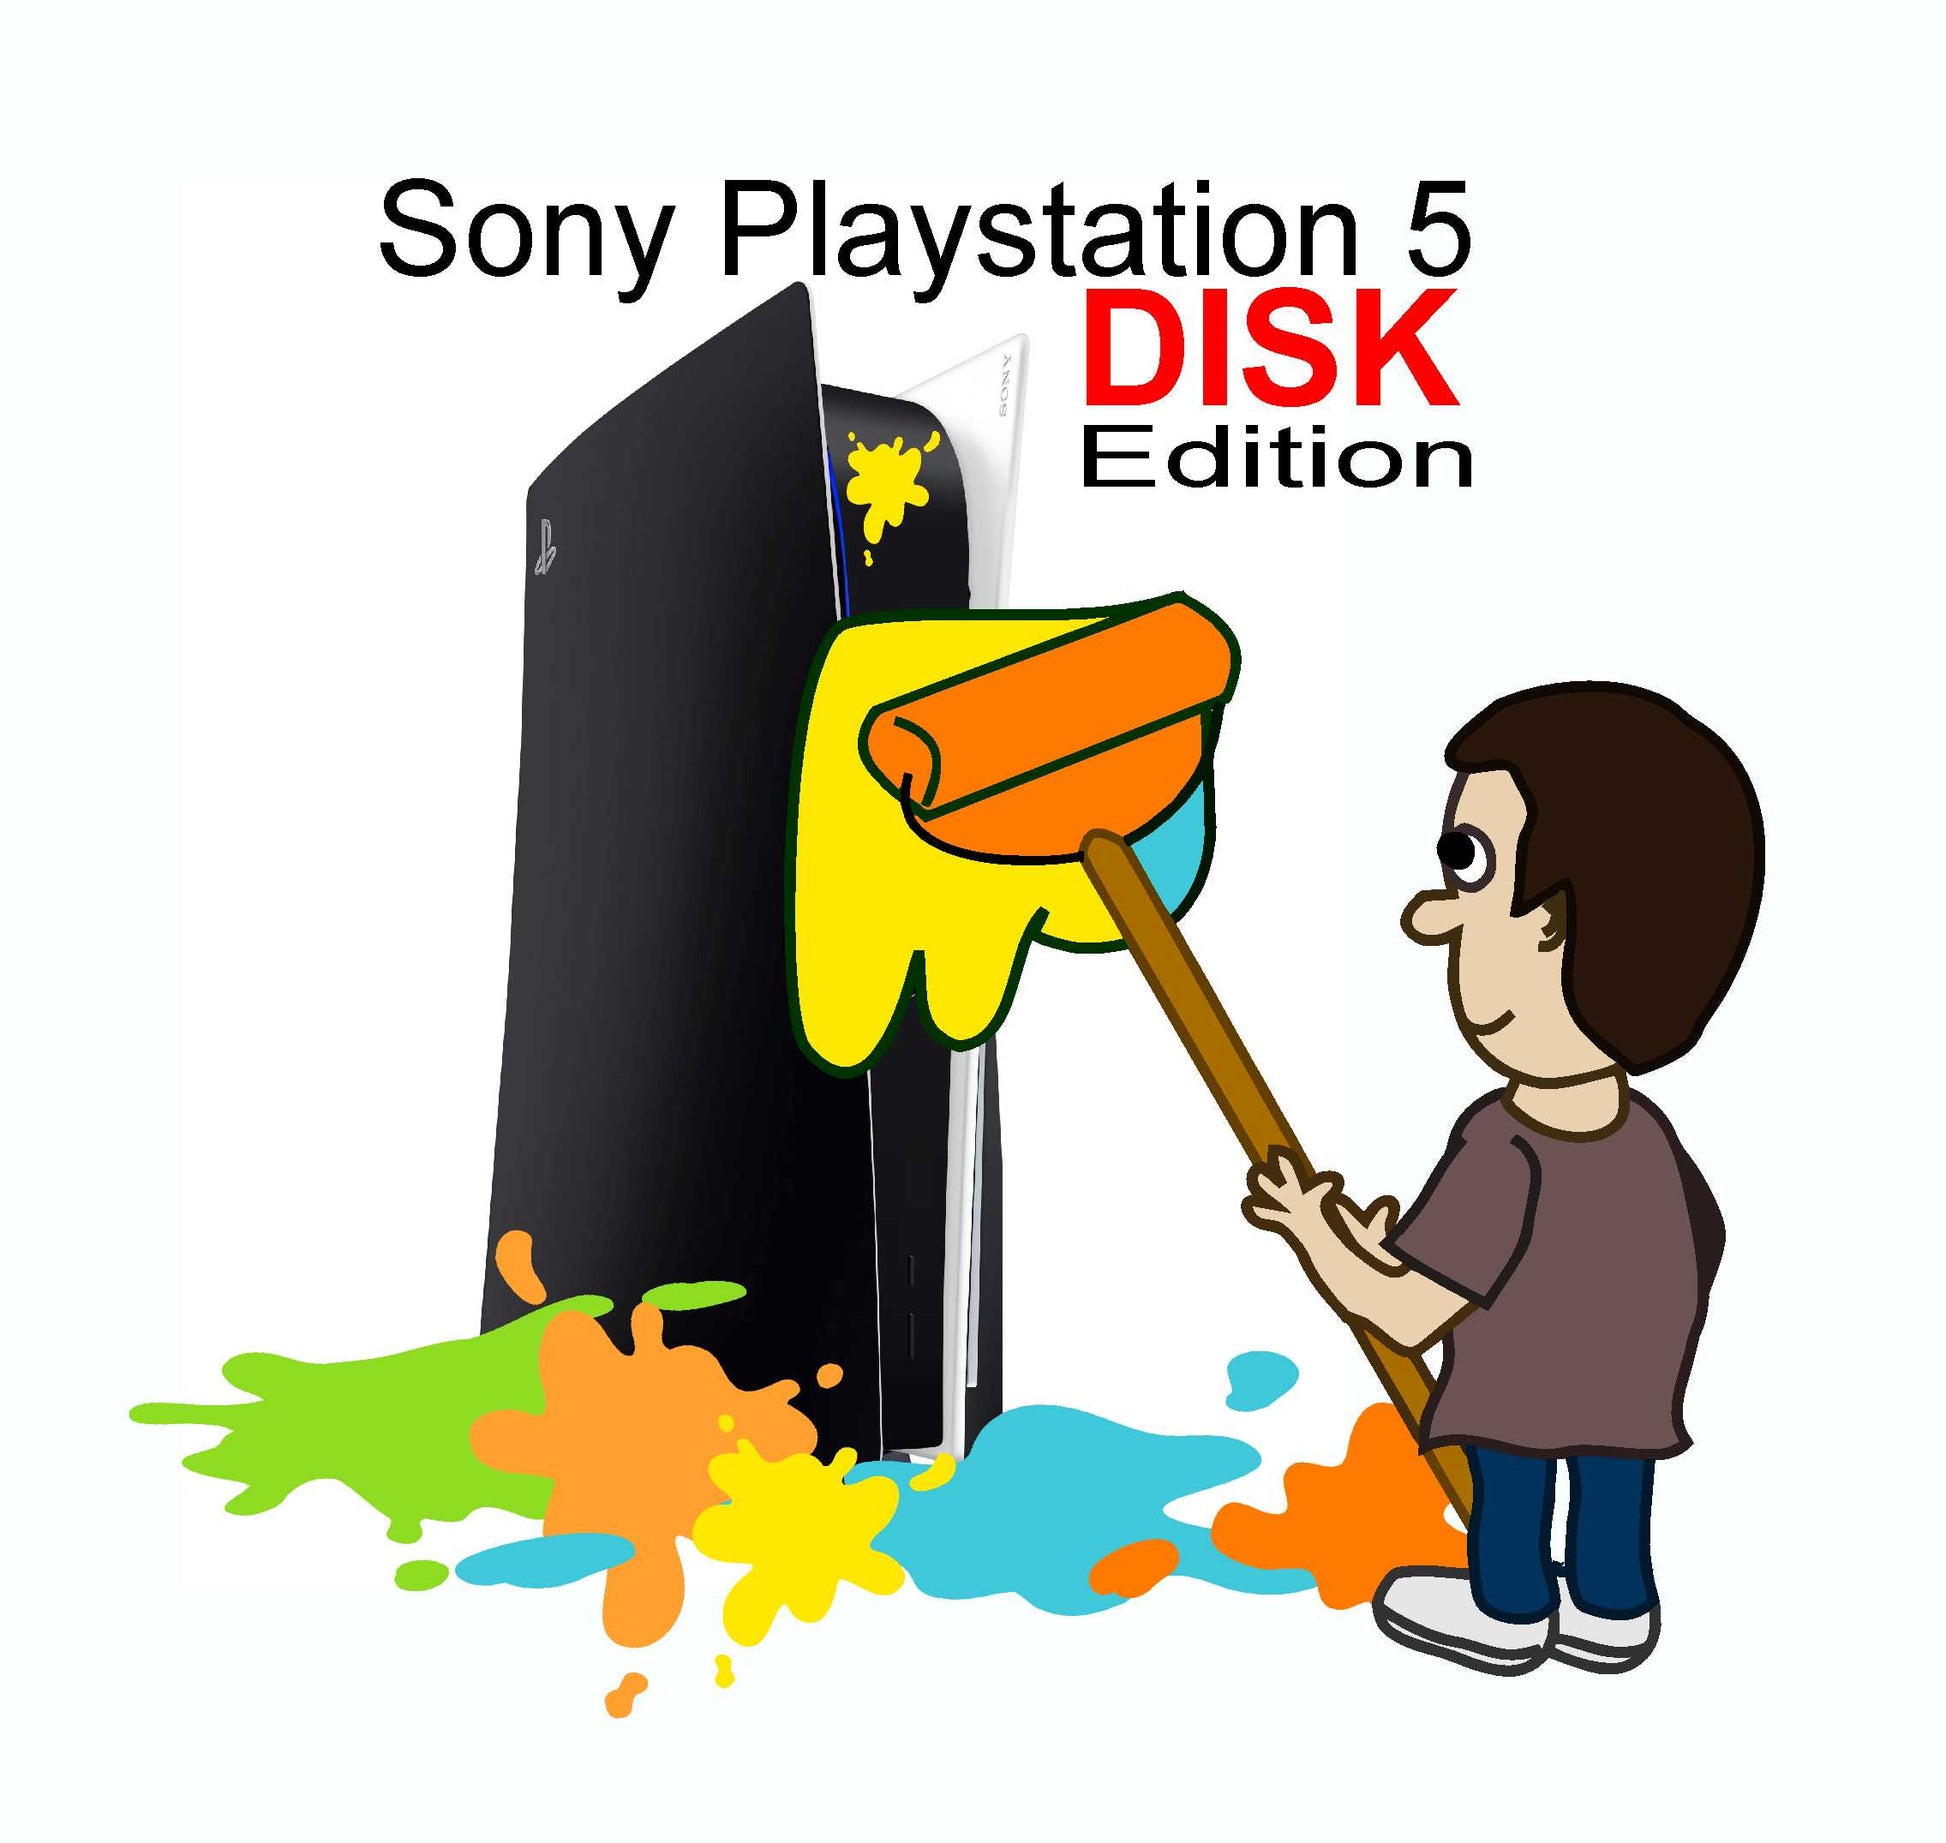 Playstation 5 Skin Disk Edition Aufkleber Folie individuell selbst gestalten cpb_product Skins4u   